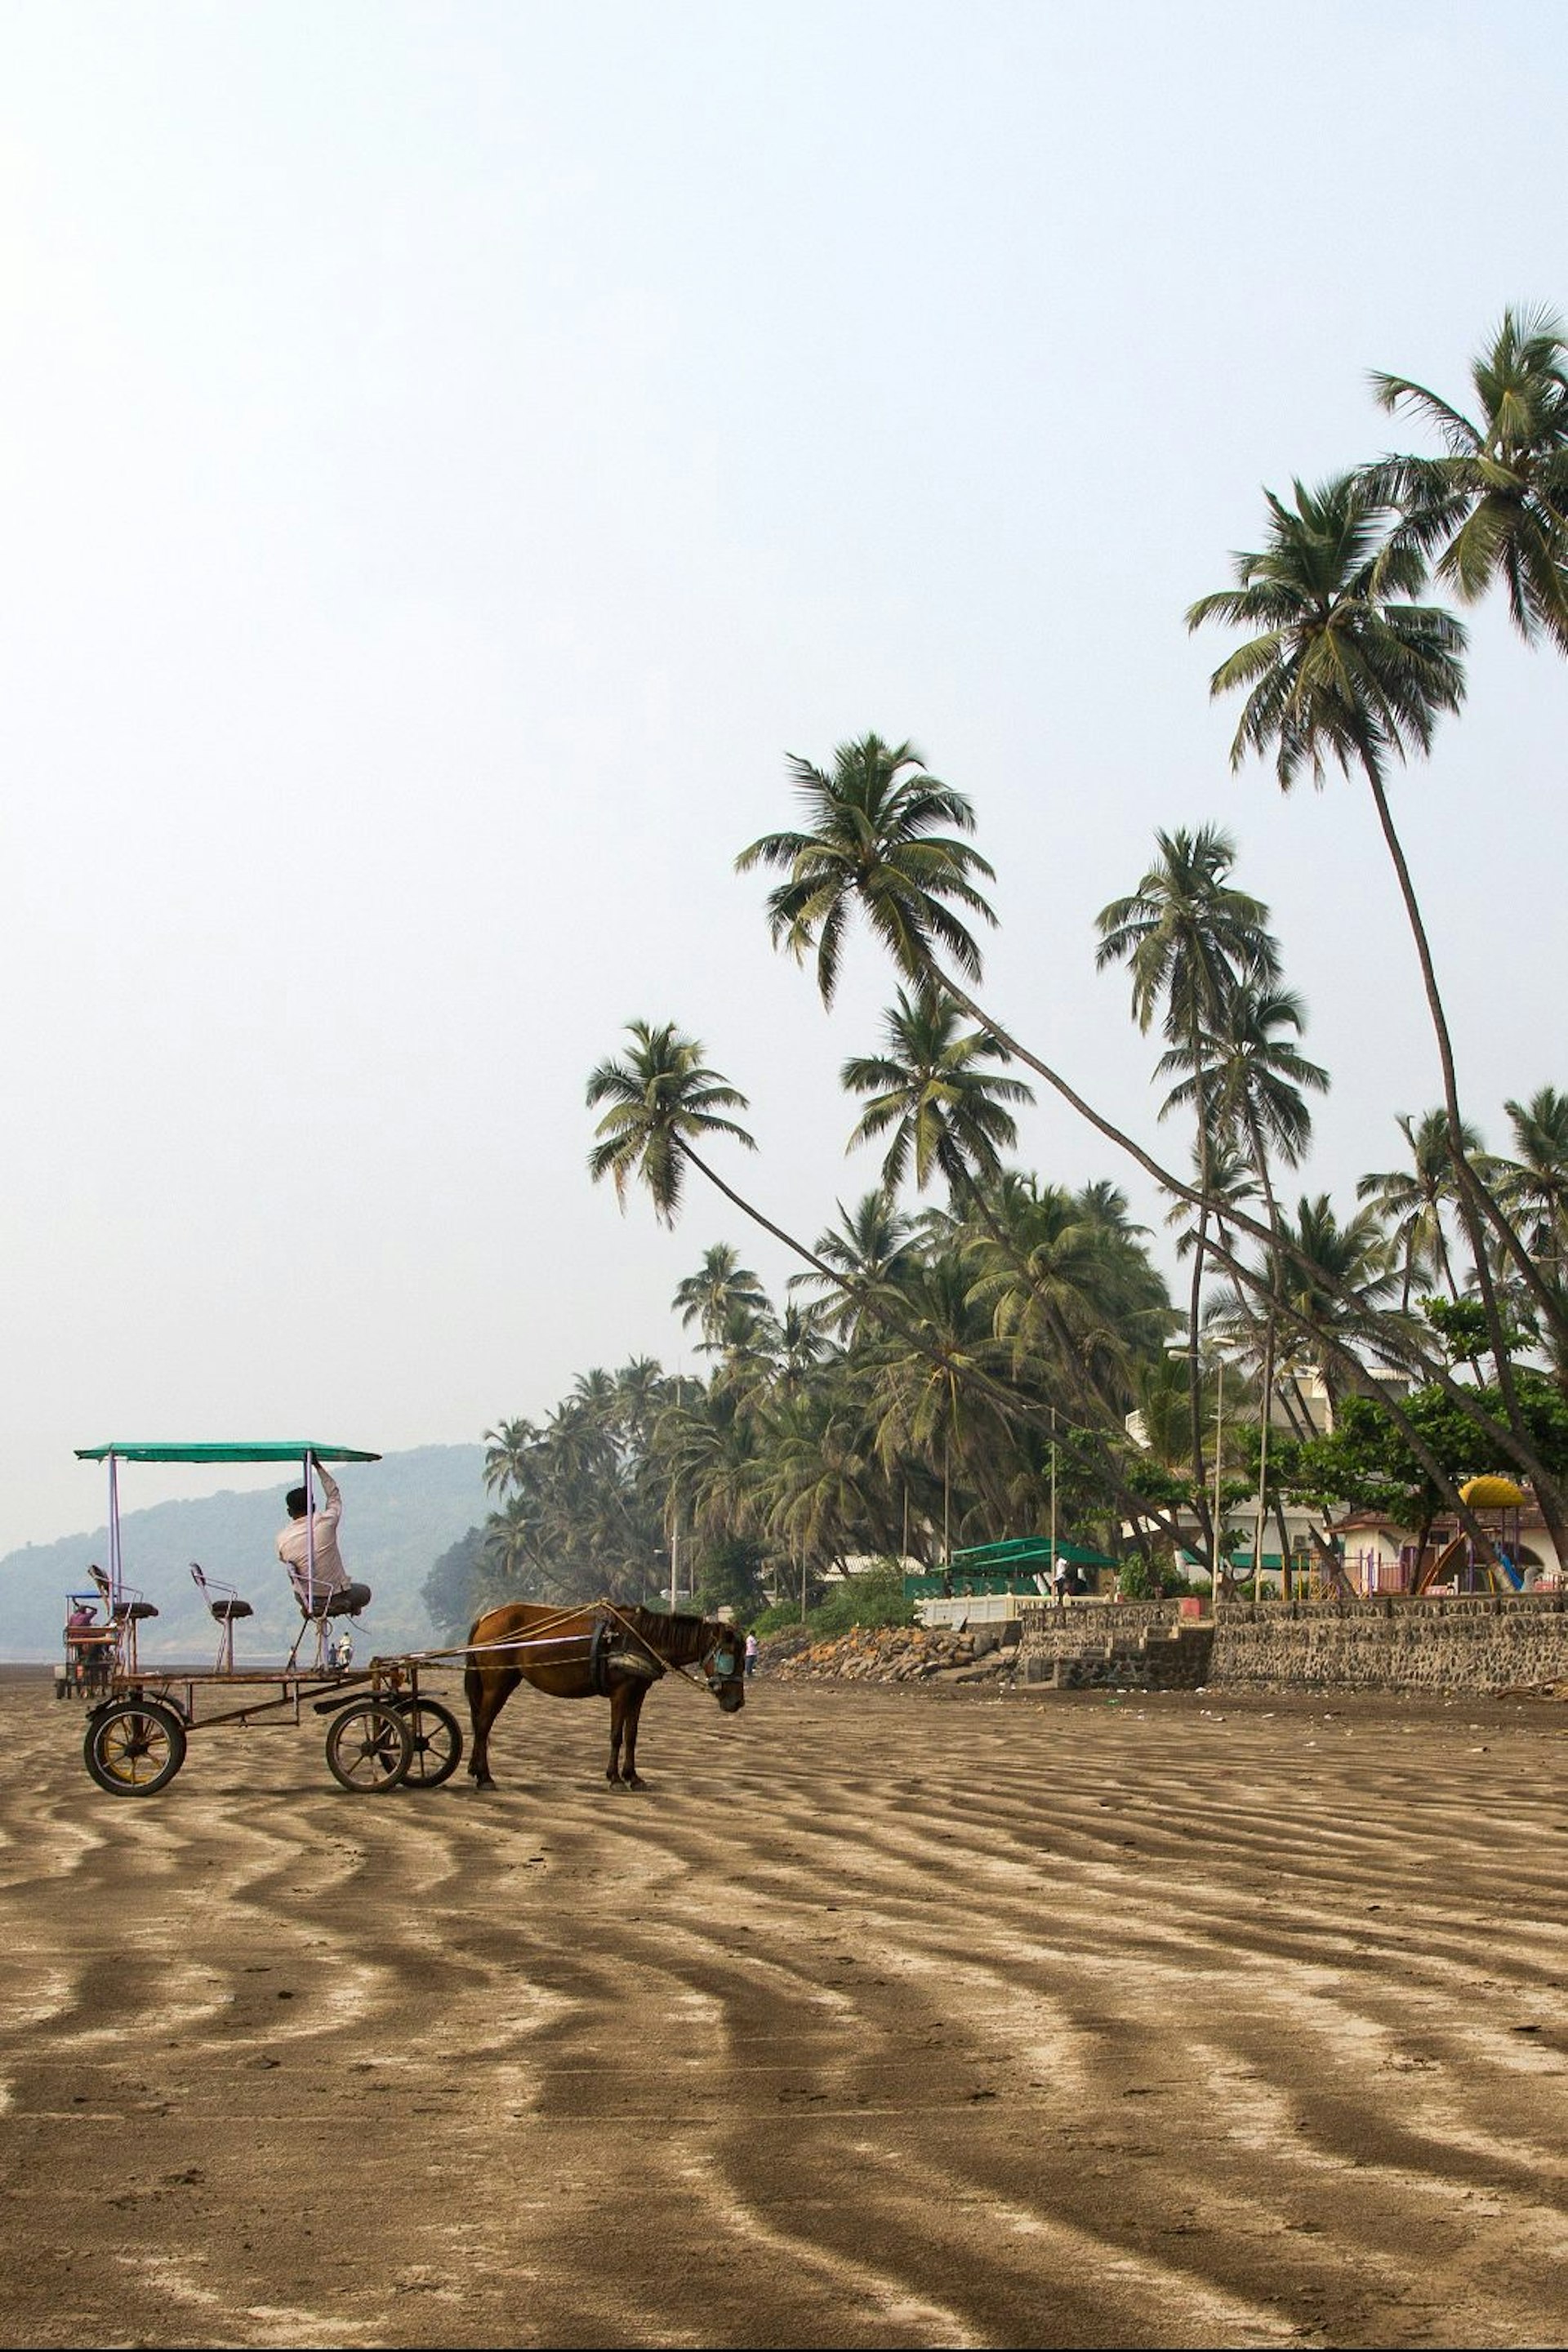 A calm beach scene at Alibaug © Arun Photography / Getty Images